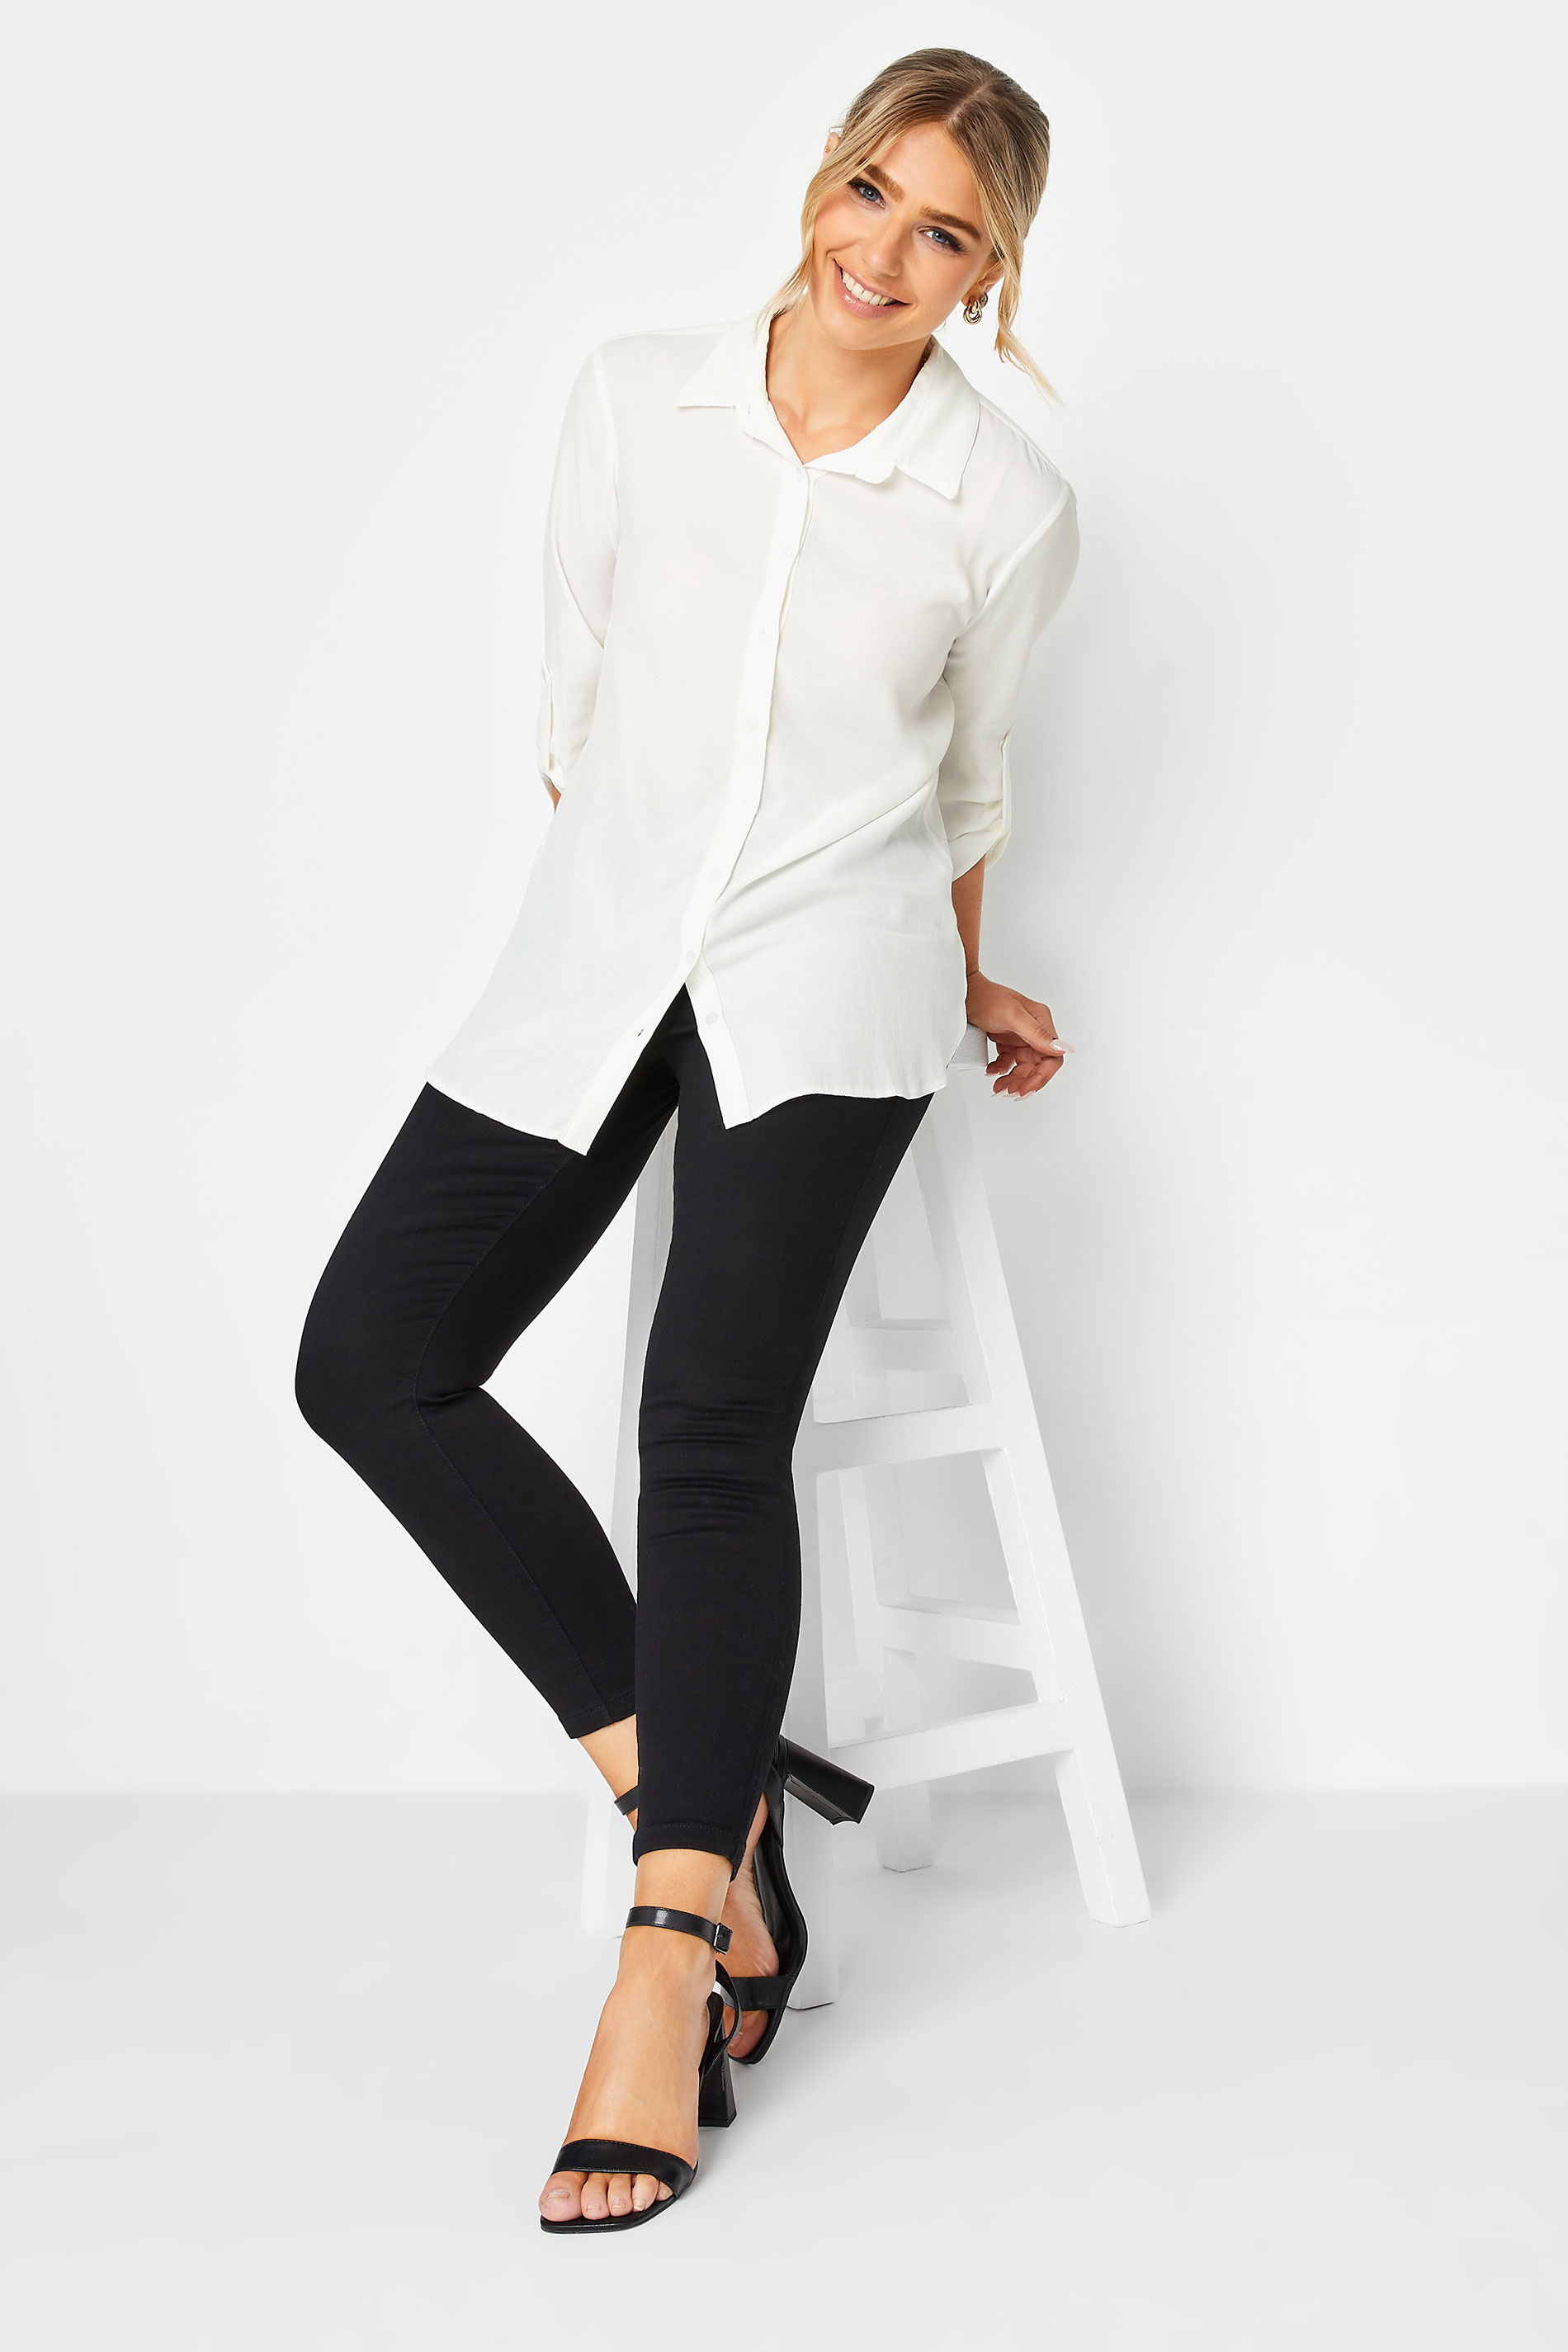 M&Co White Tab Sleeve Shirt | M&Co 2